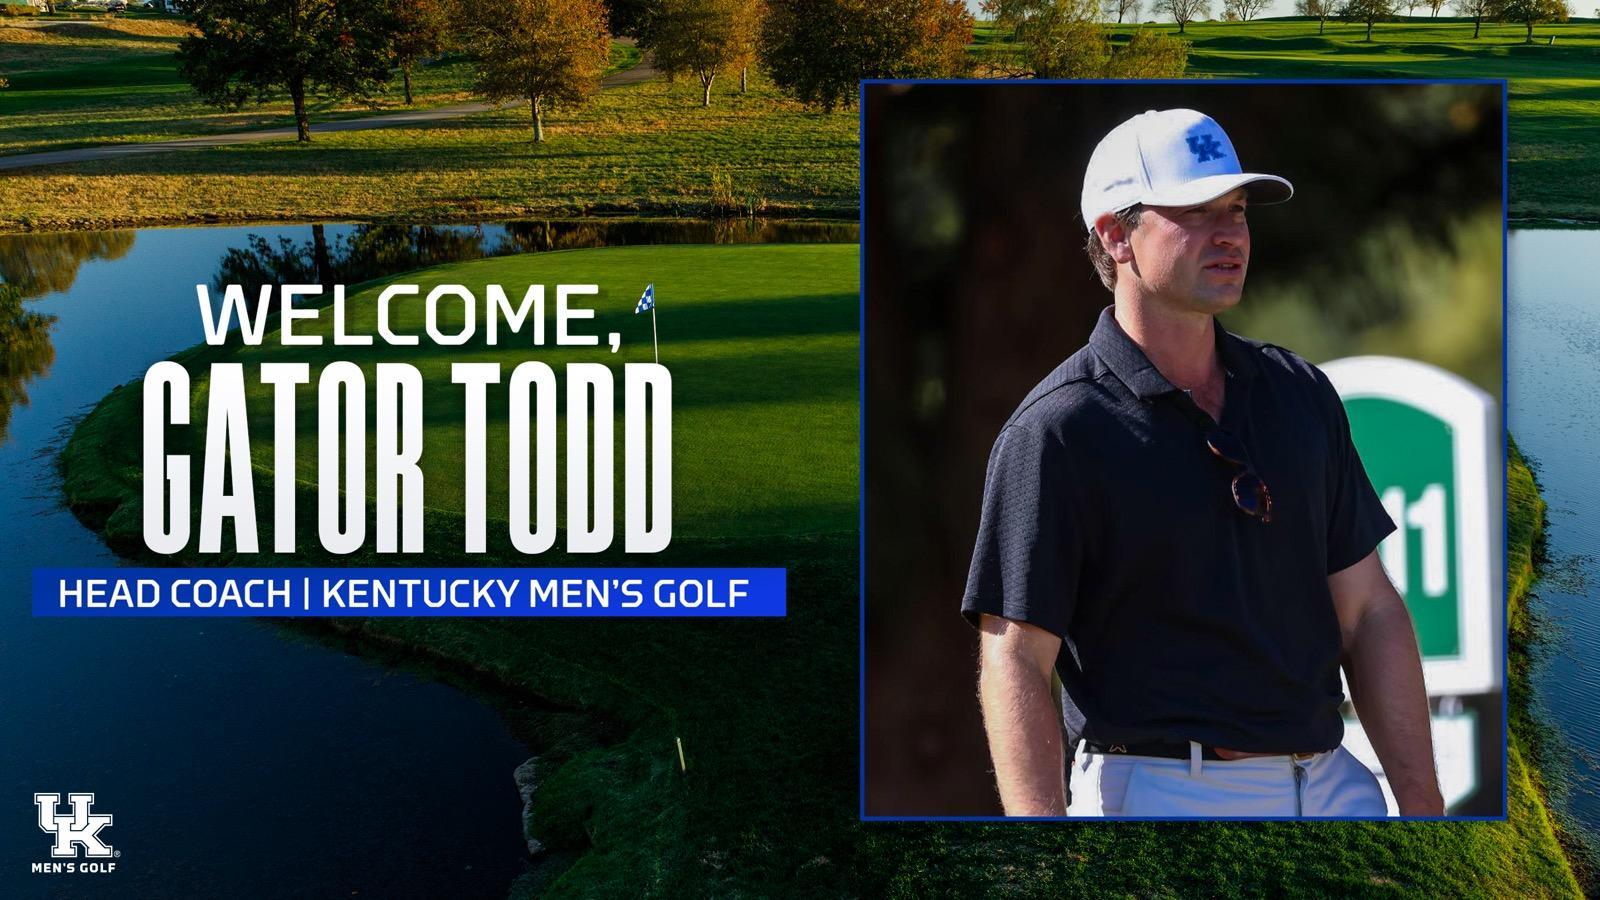 Gator Todd Hired as Head Coach of Kentucky Men’s Golf